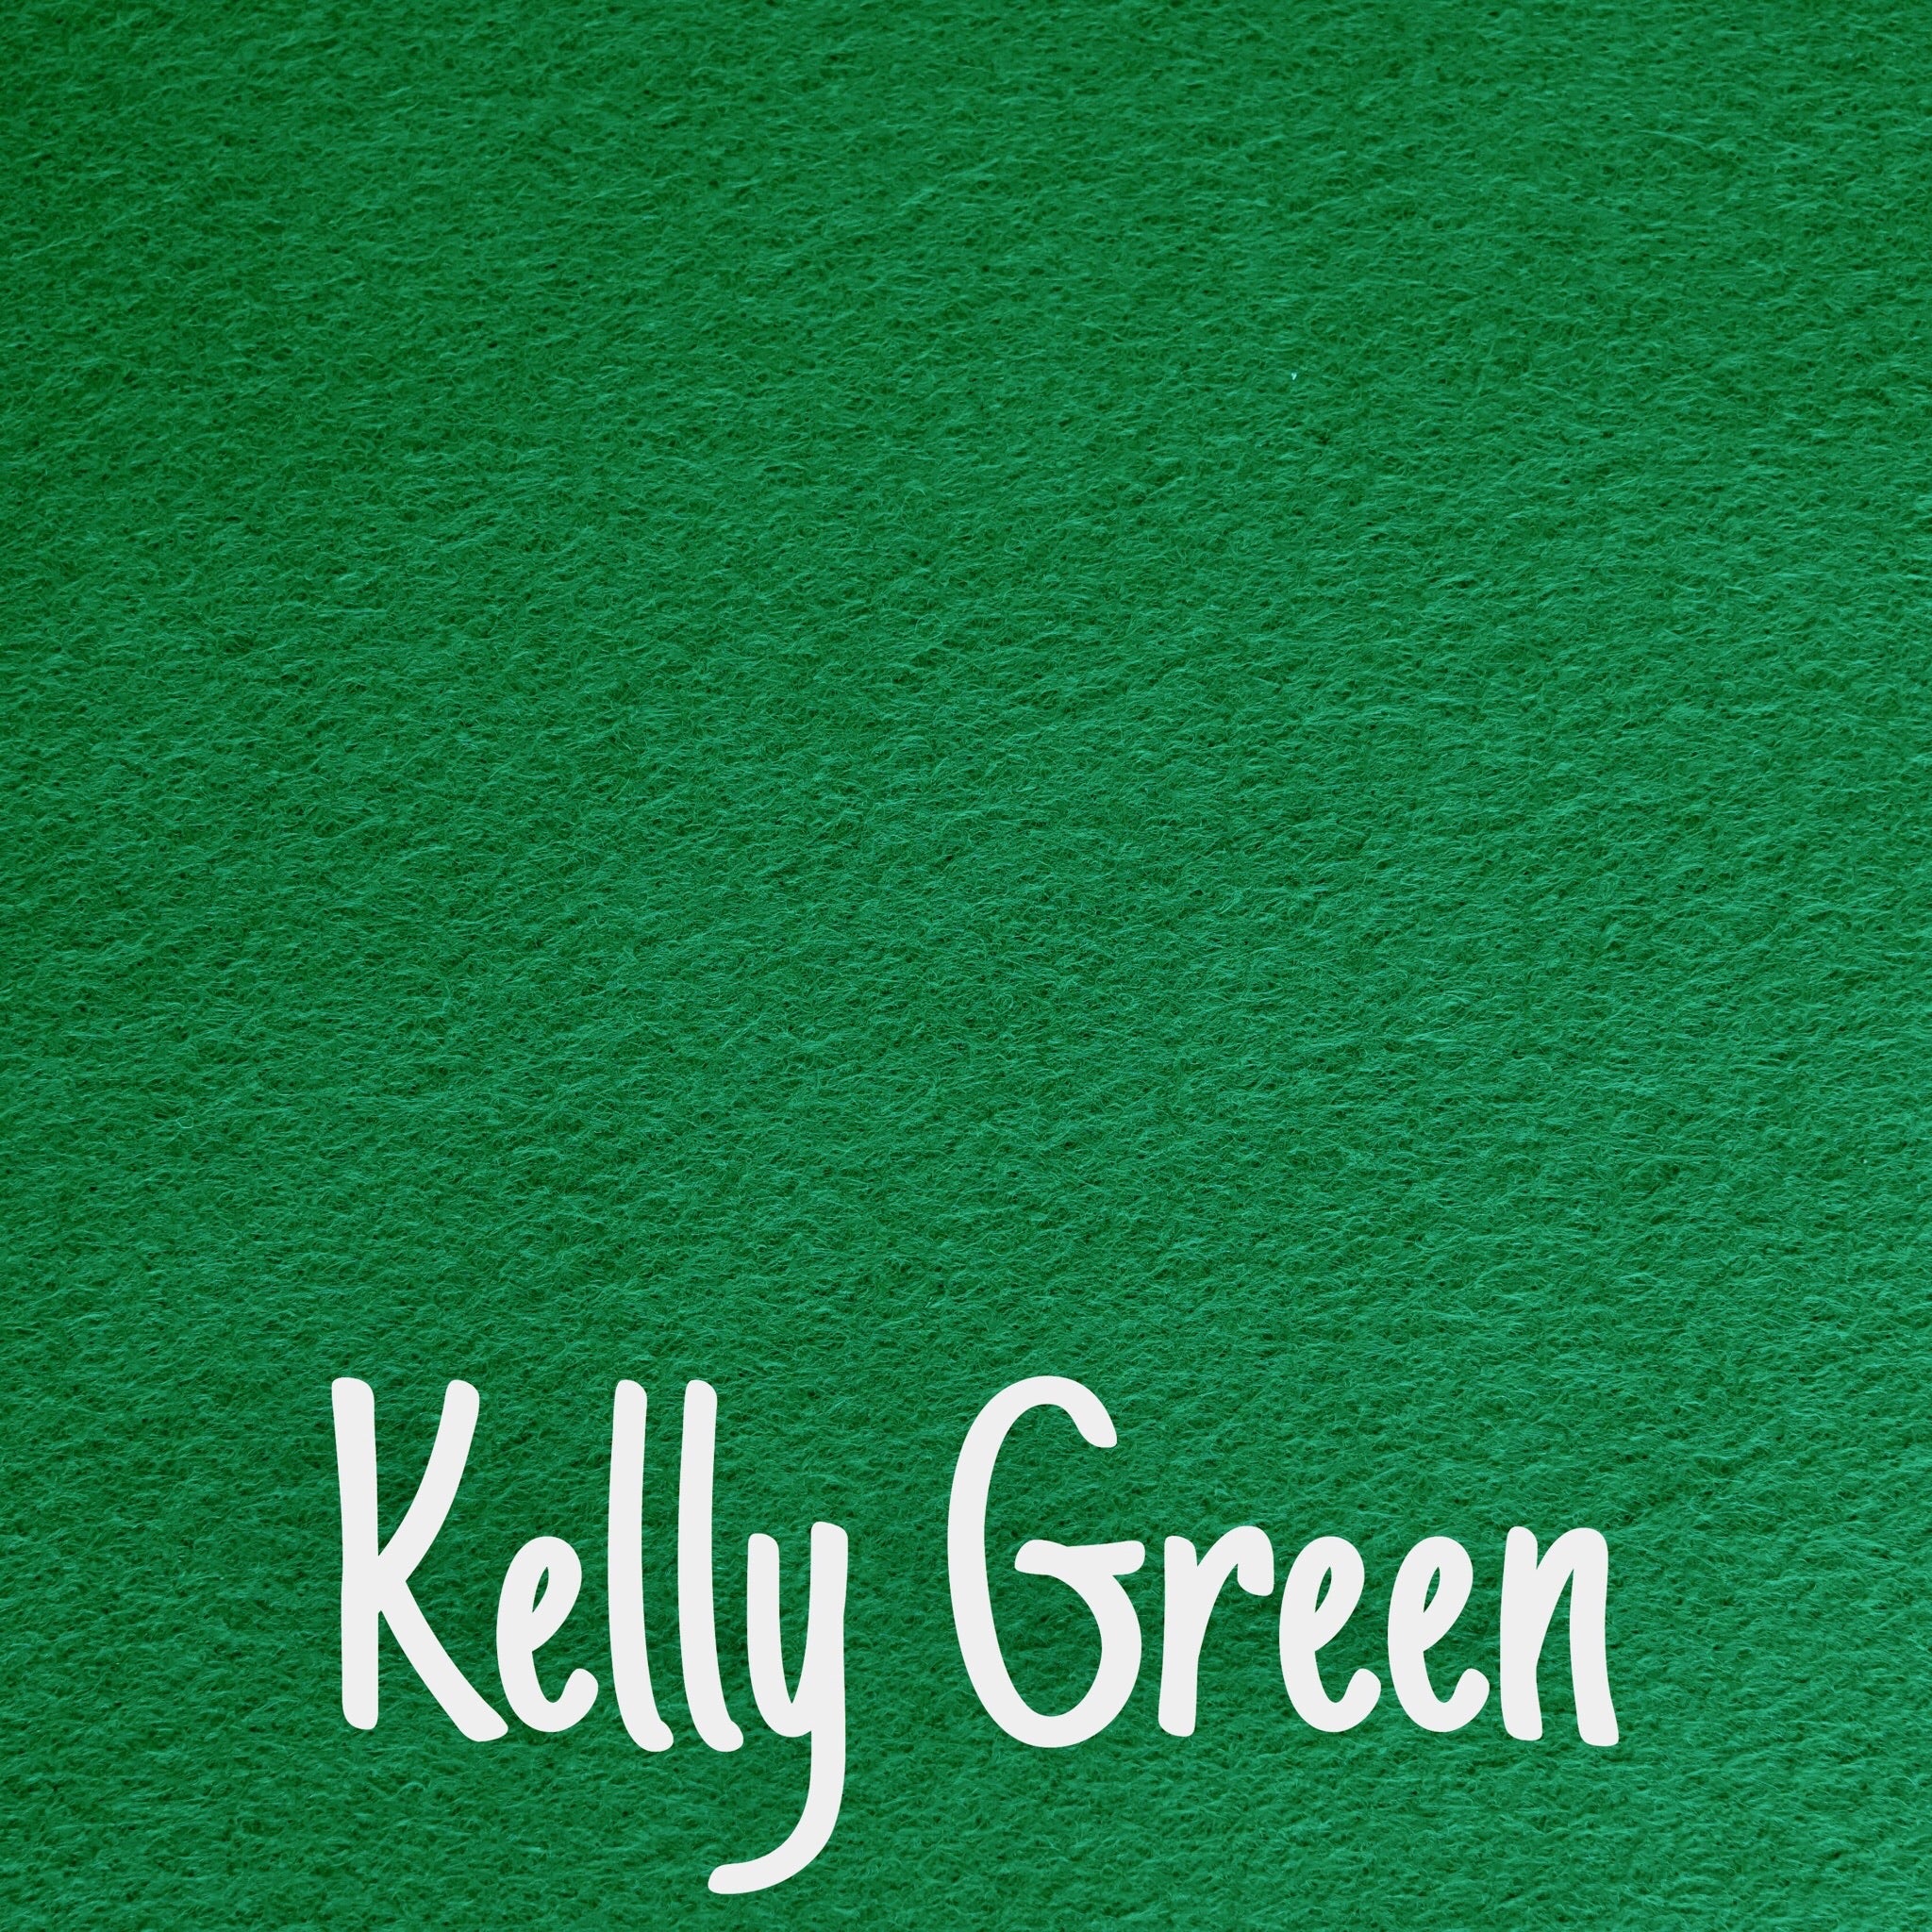 The Greenfelt F.A.Q. - Green Felt